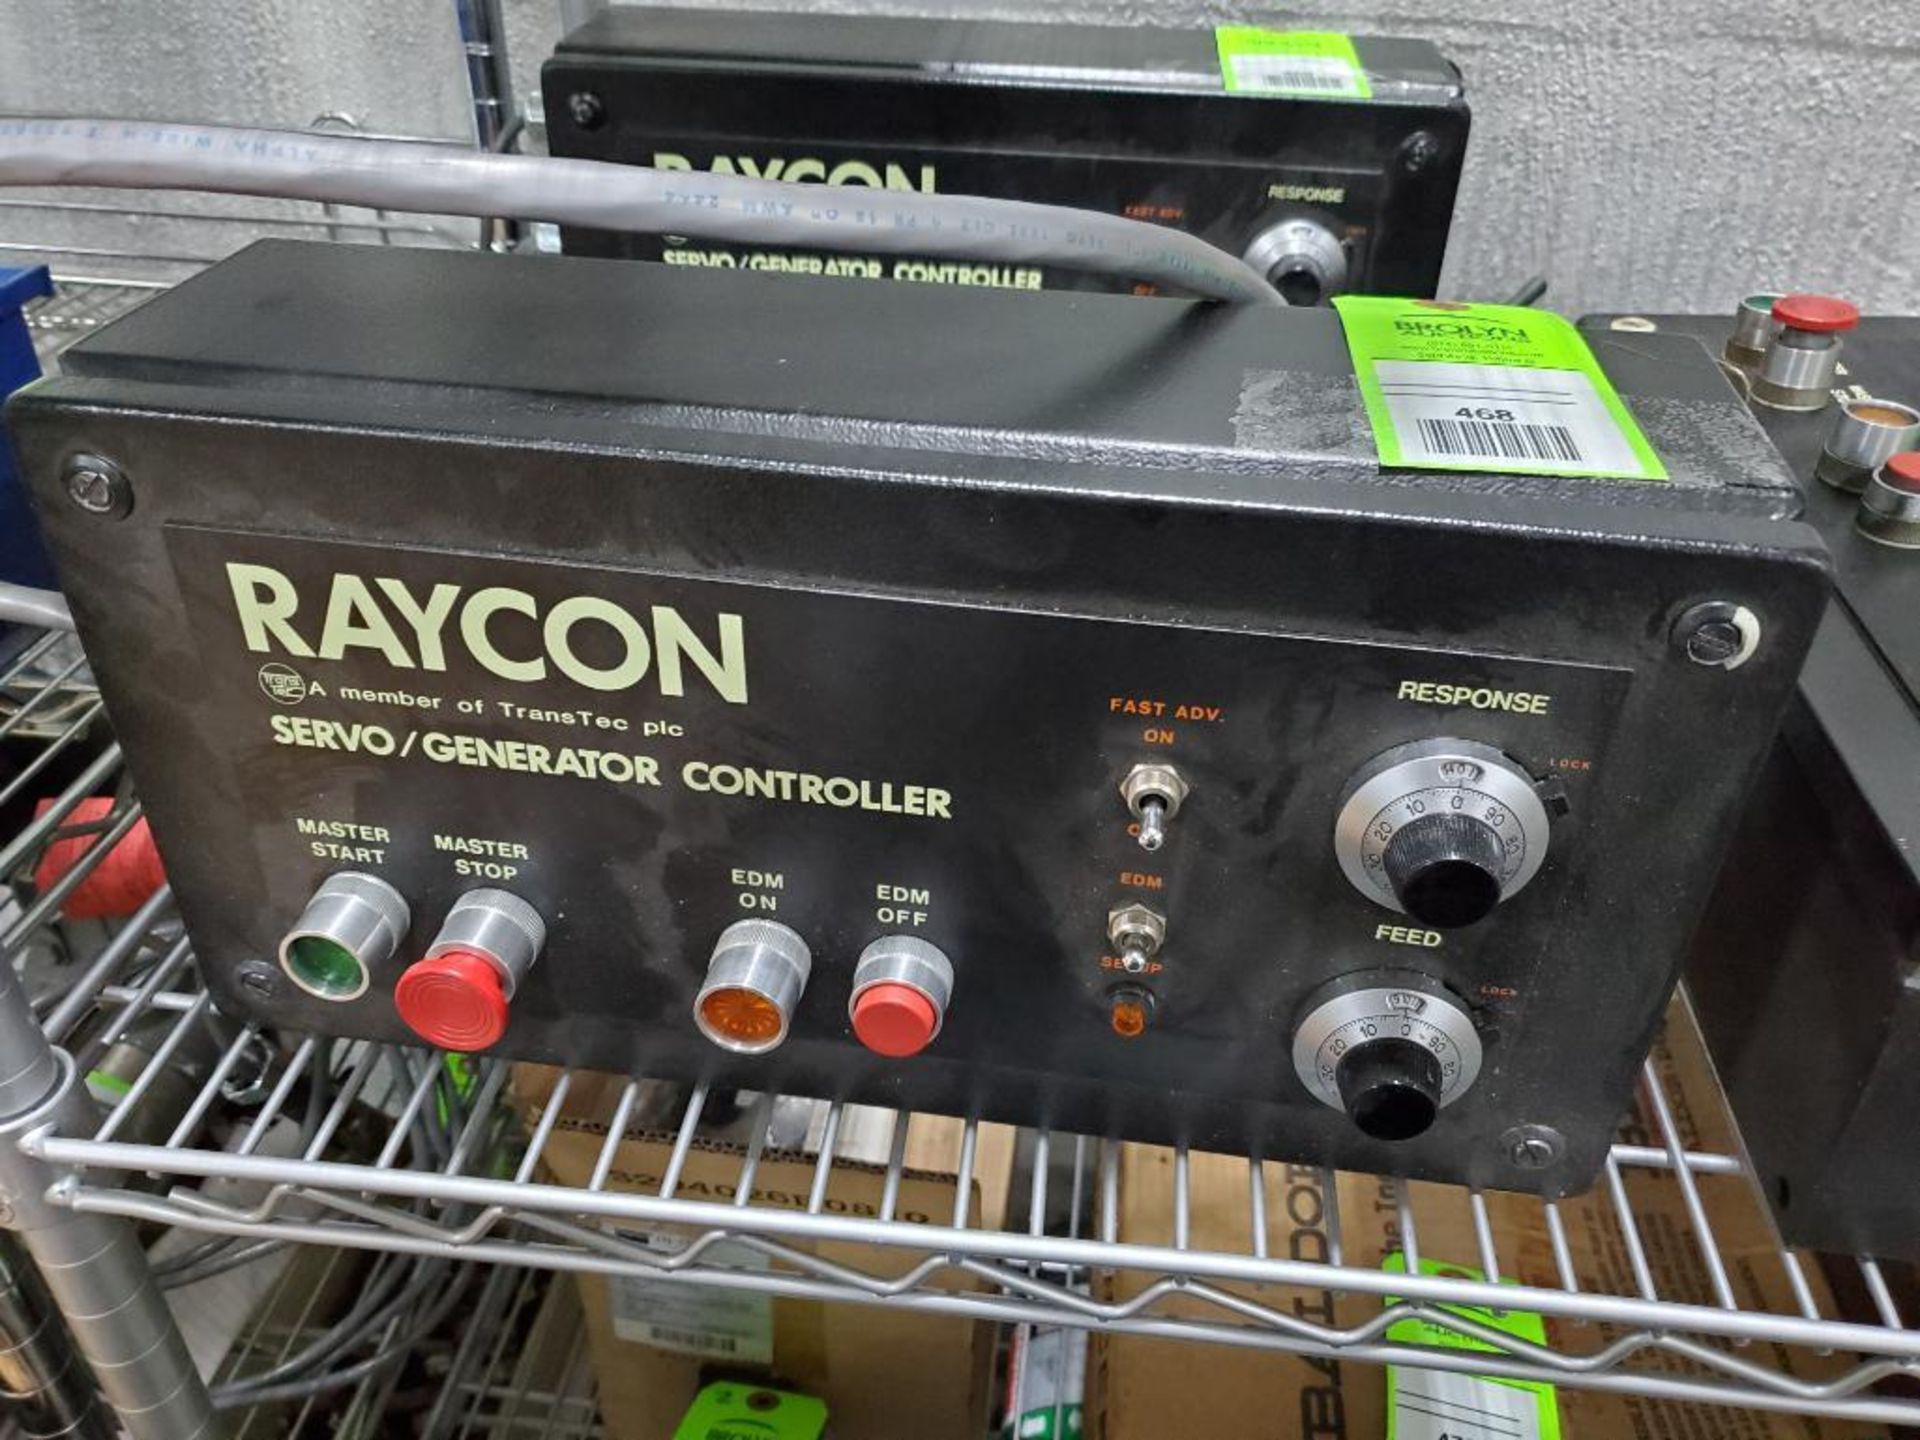 Raycon servo generator controller.